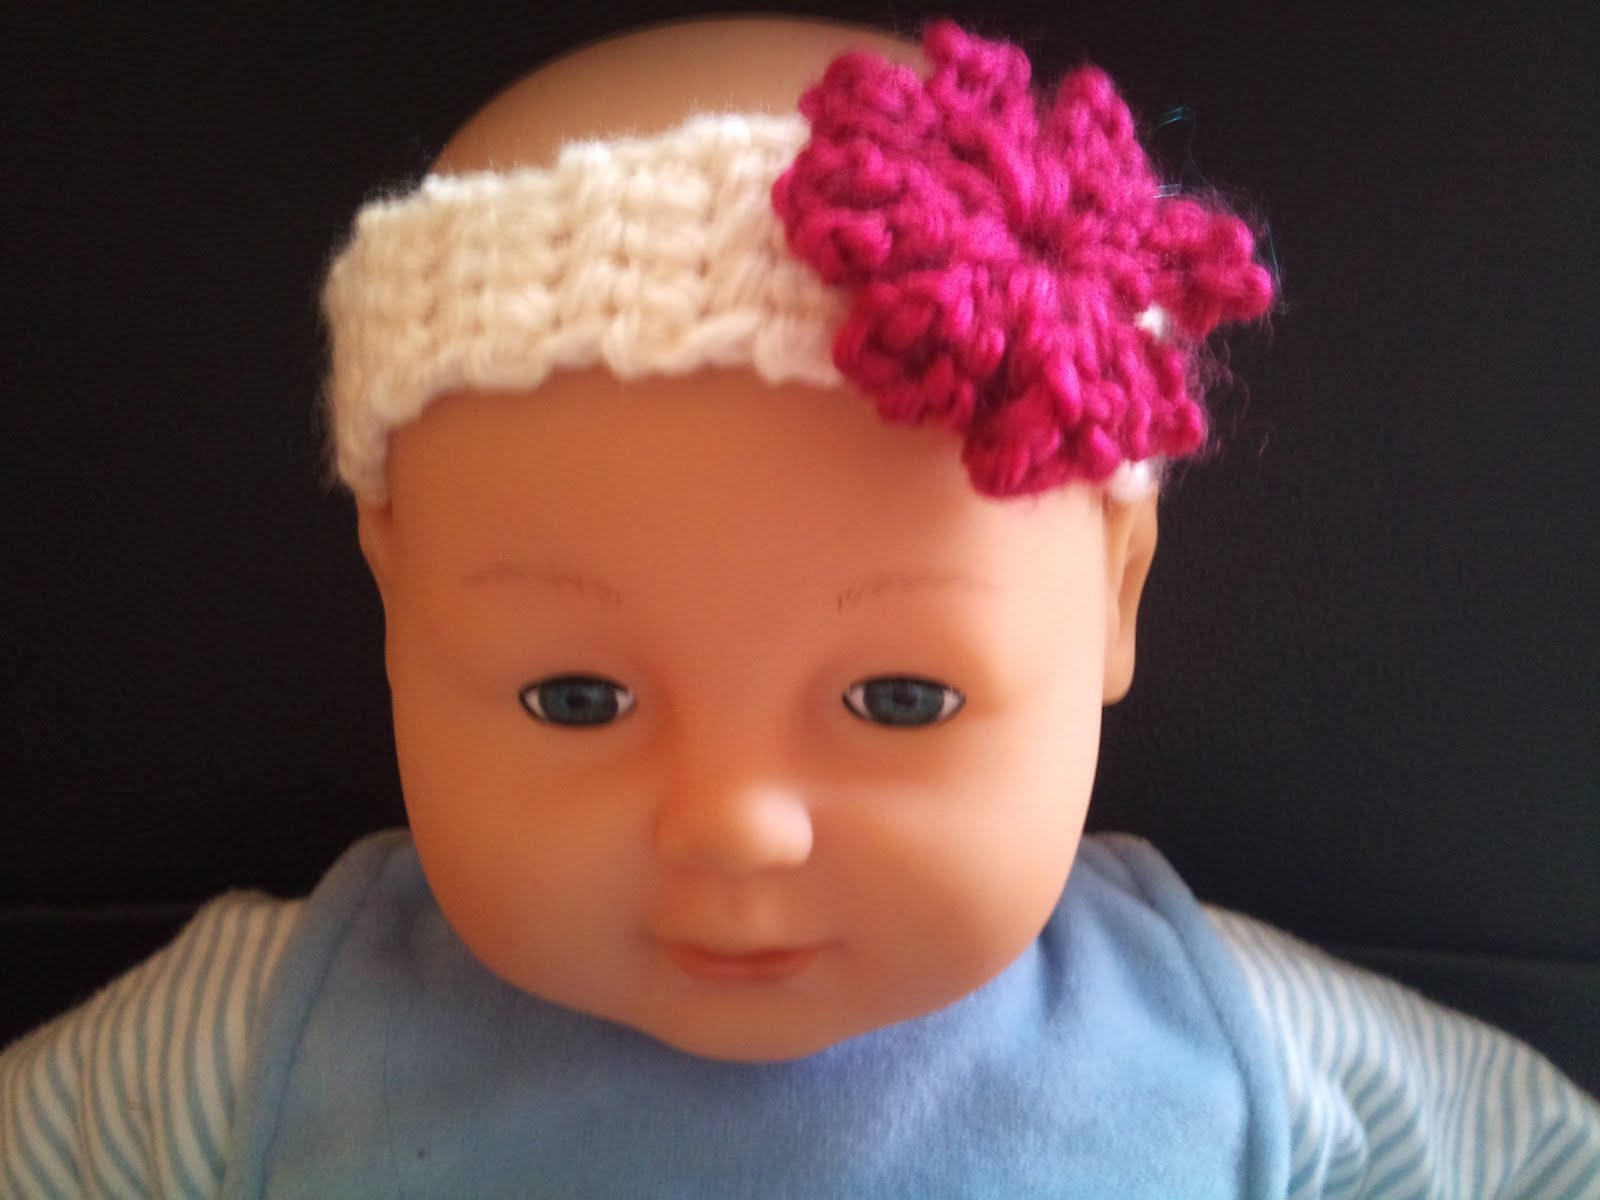 632 New baby headbands and soft spot 664 BABY CROCHET HEADBAND PATTERN   Crochet Patterns 